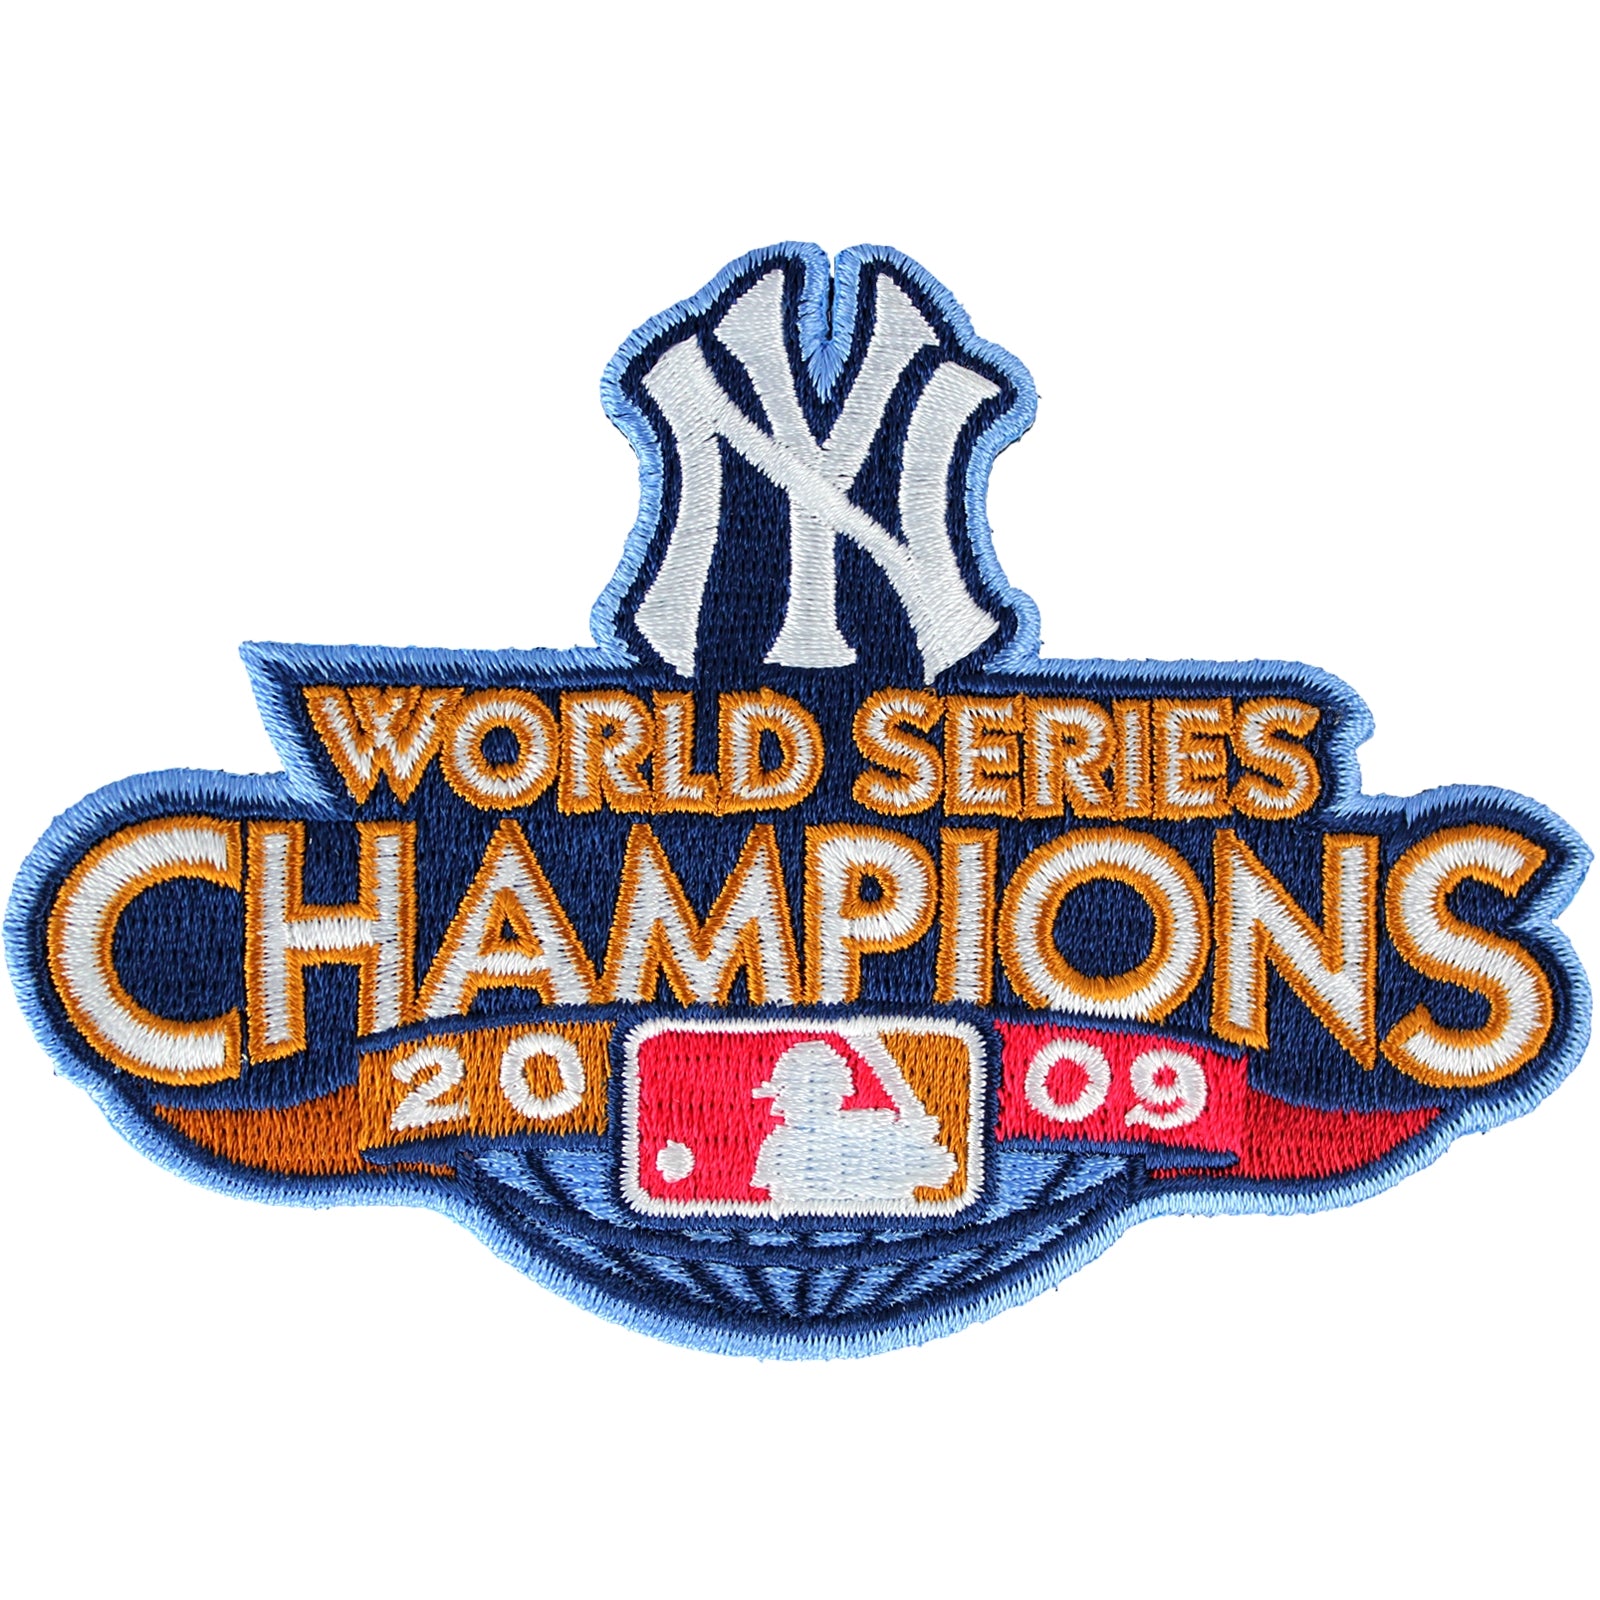 2011 World Series Patch